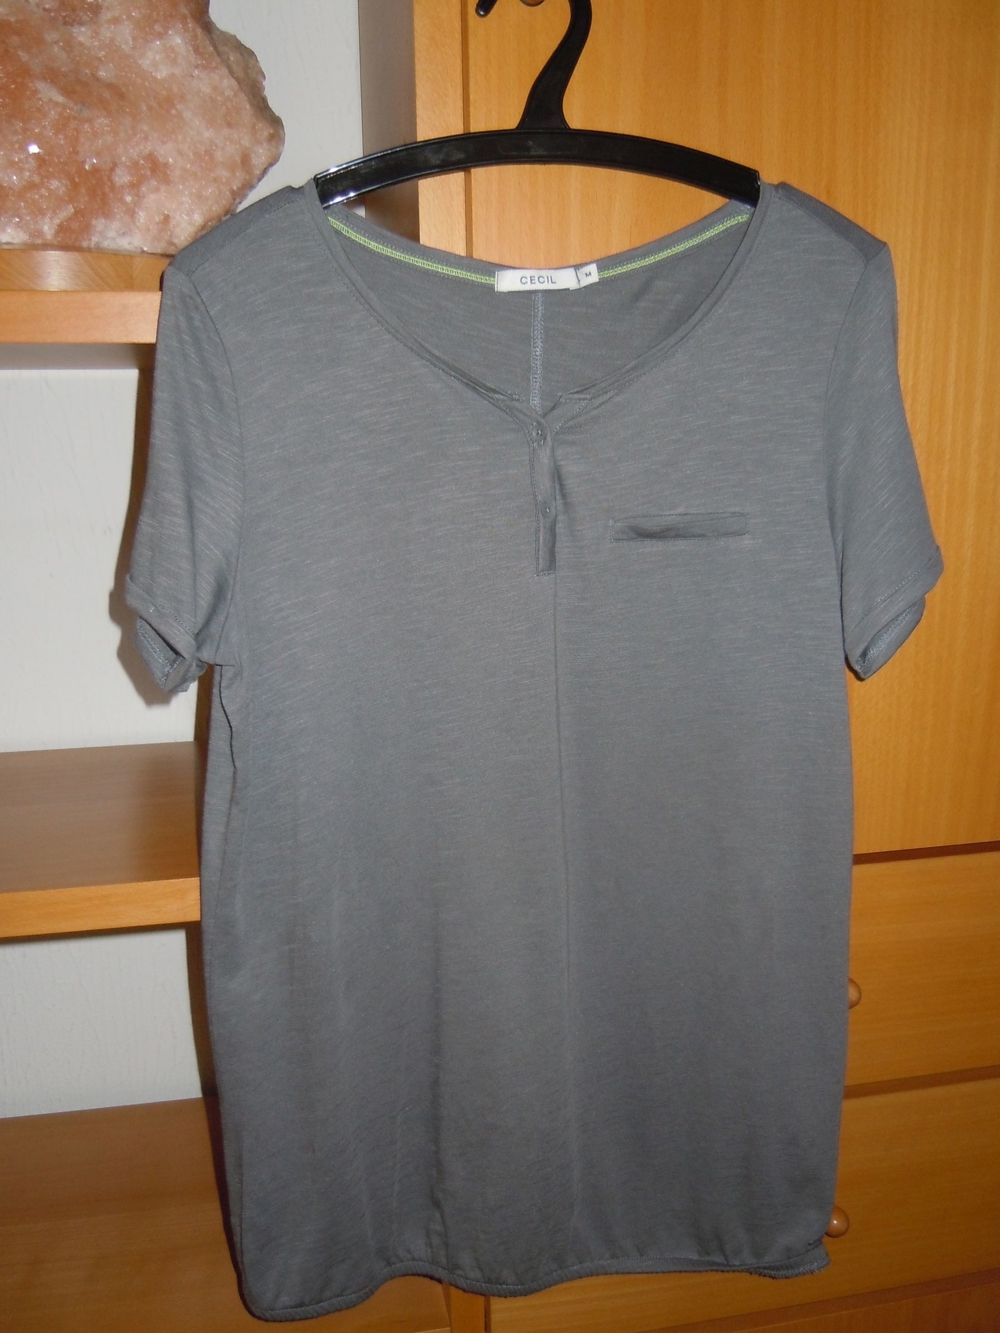 Neues Basic Shirt Jule CECIL, Farbe: graphit light grey, Gr. M (40)